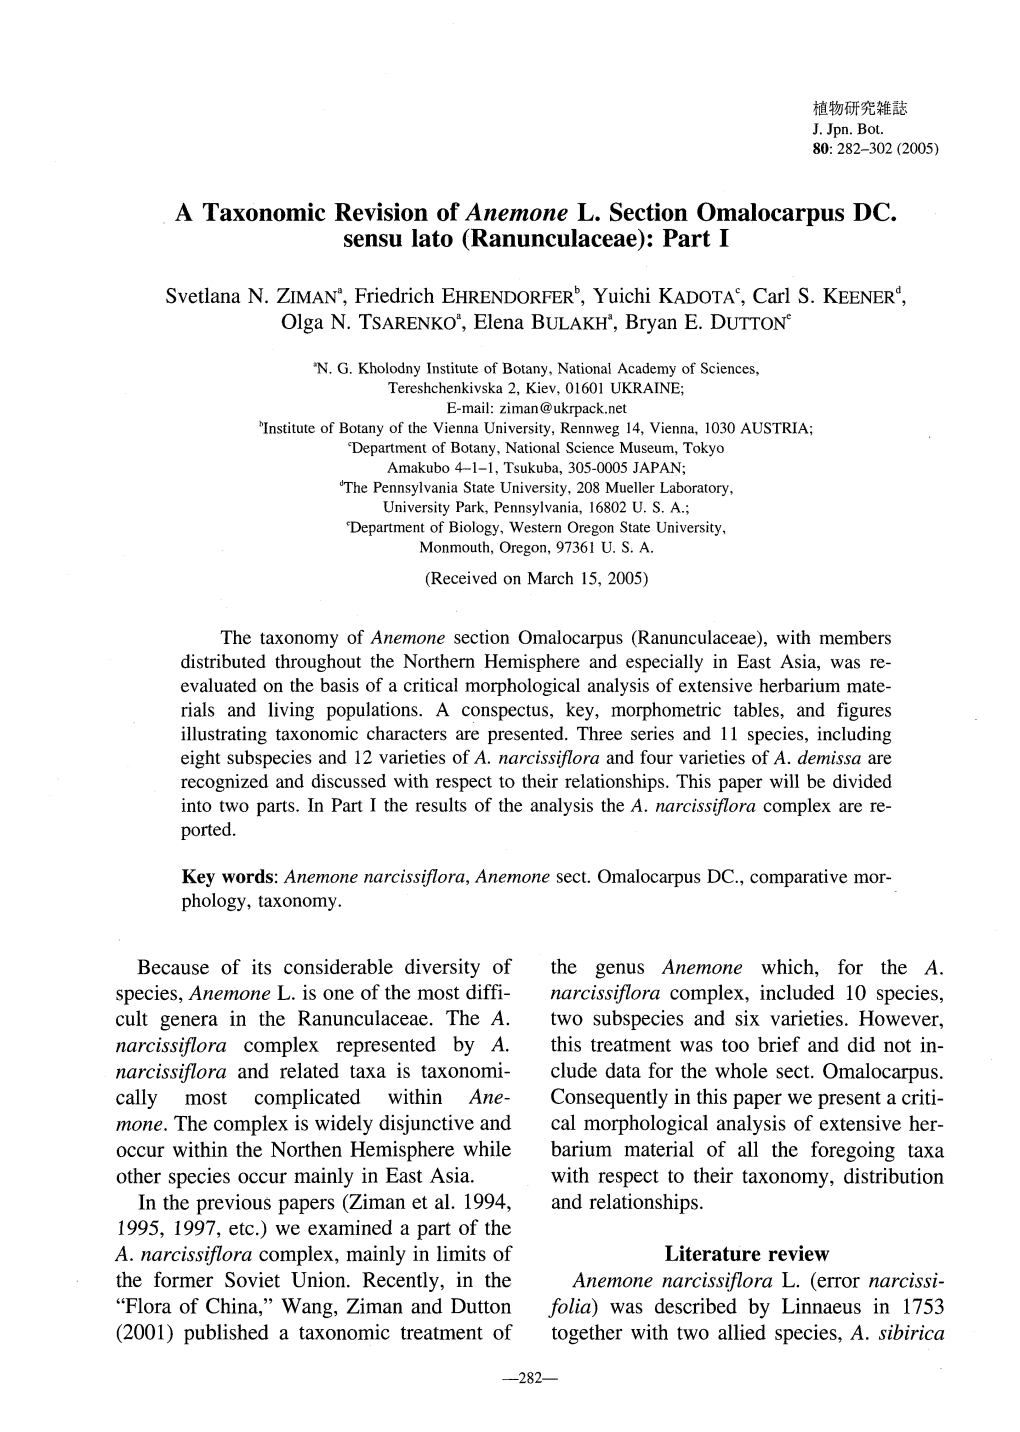 A Taxonomic Revision of Anemone L. Section Omalocarpus DC